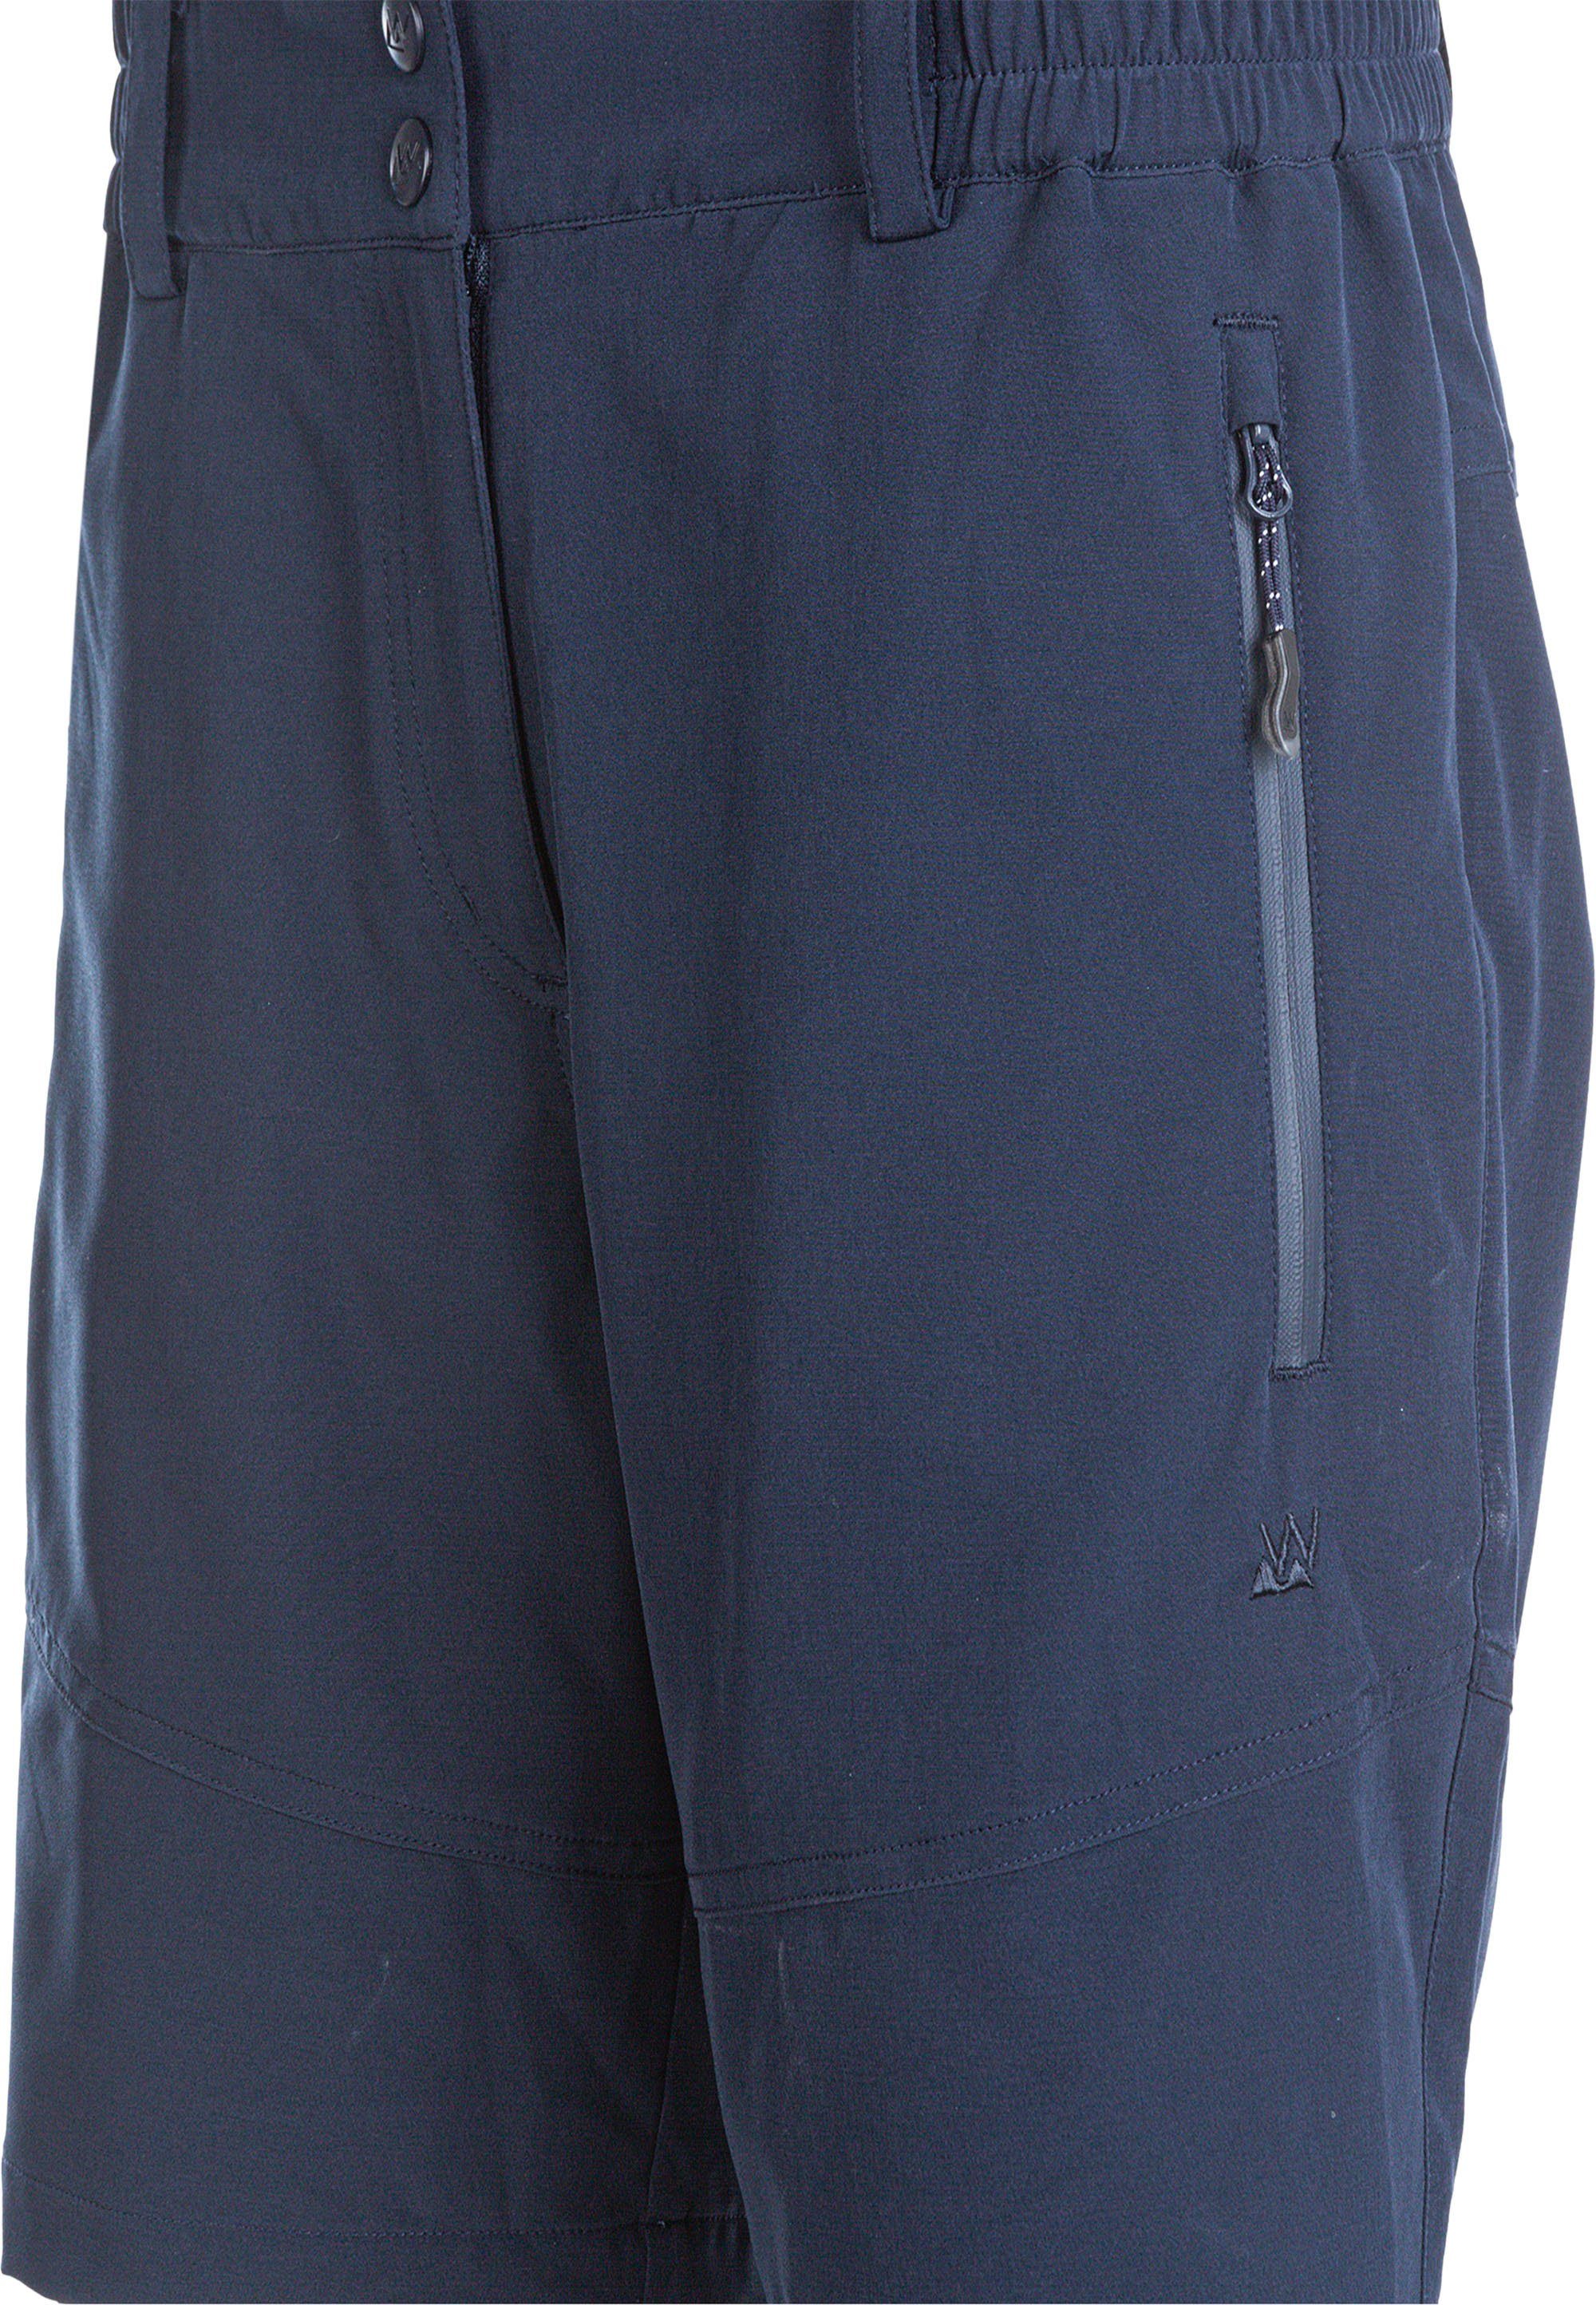 Funktionsstretch LALA extra komfortablem dunkelblau mit WHISTLER Shorts